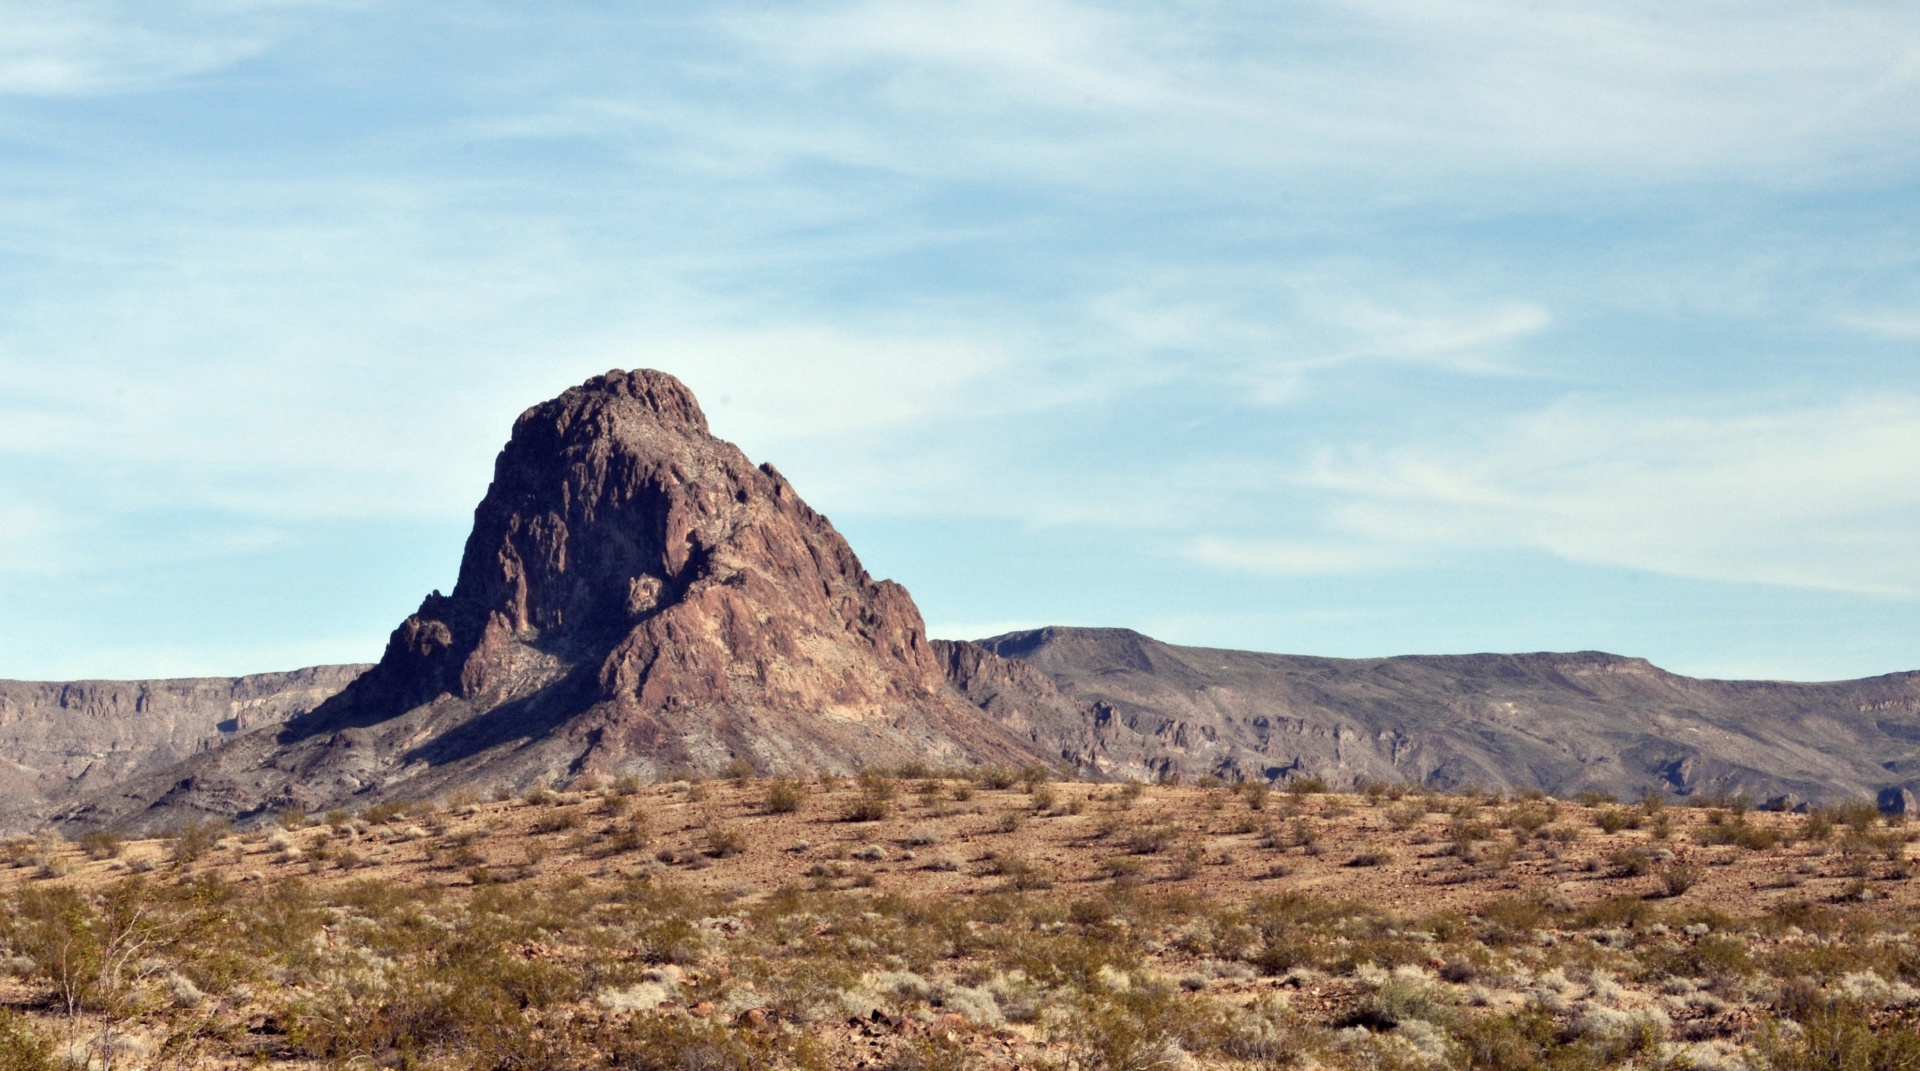 Desert Landscape of a Large rock protruding from the Arizona Desert